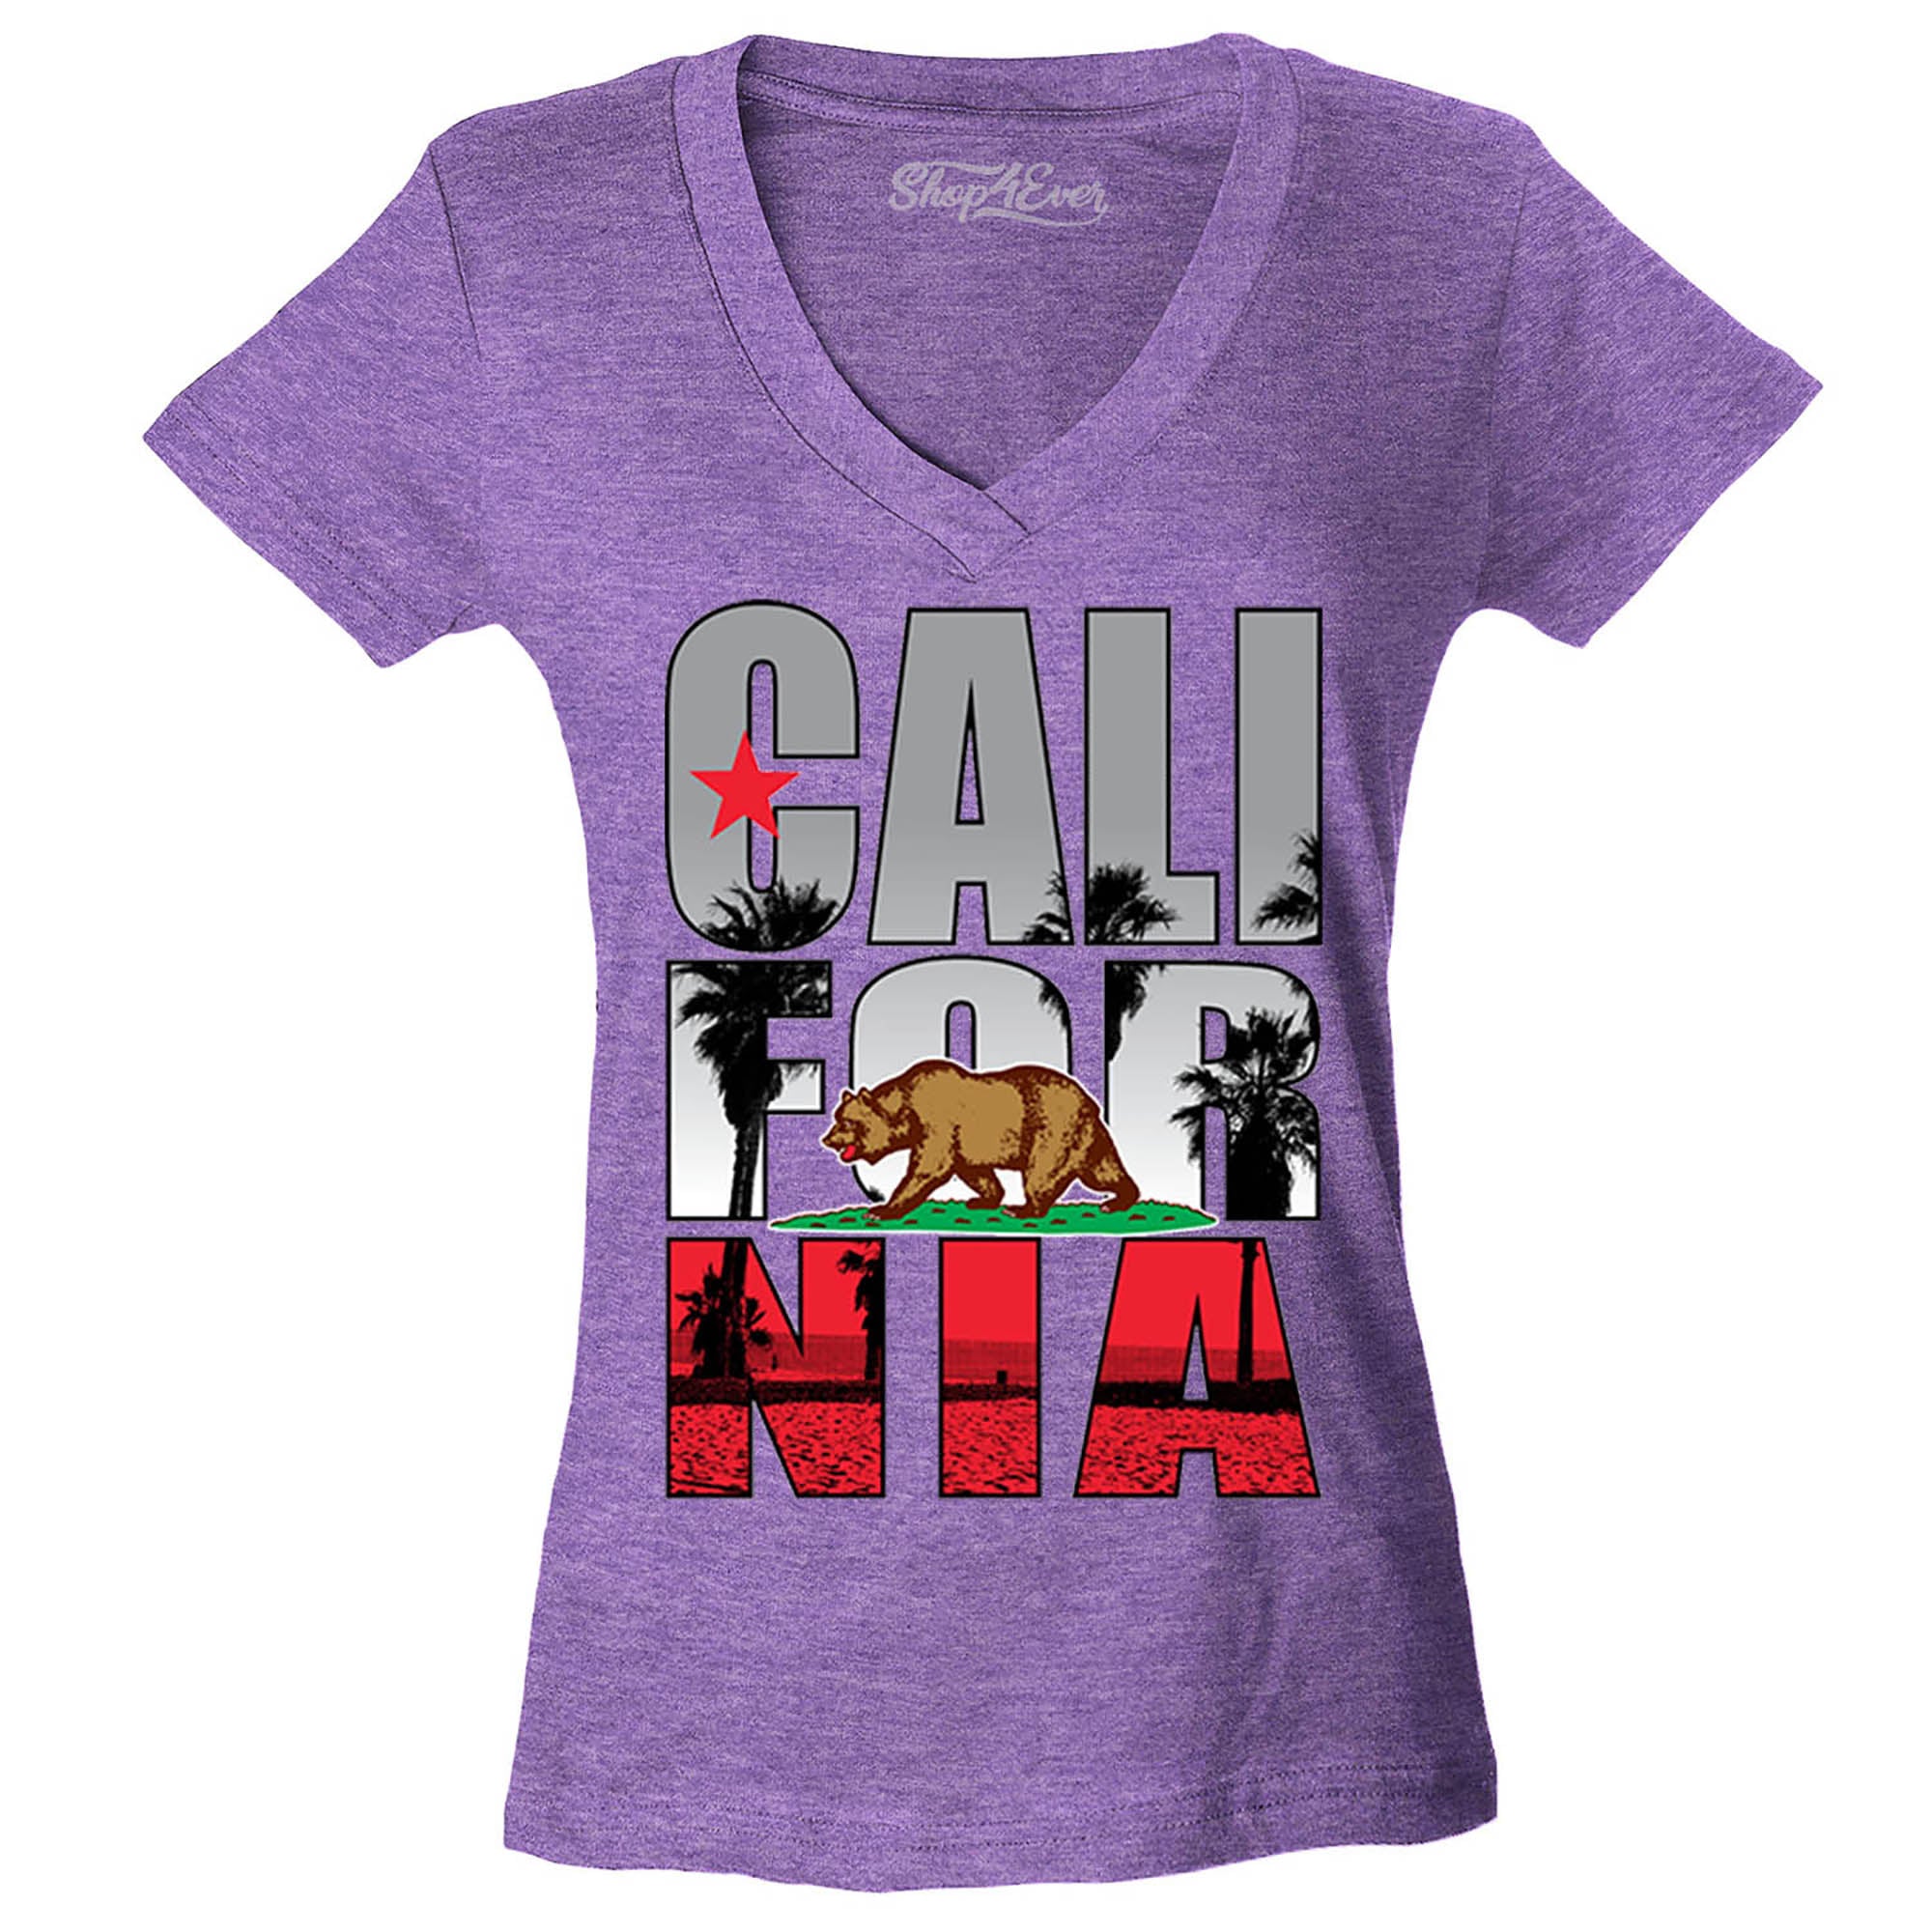 California Beach Palm Tree Women's V-Neck T-Shirt Flag Shirts Slim FIT